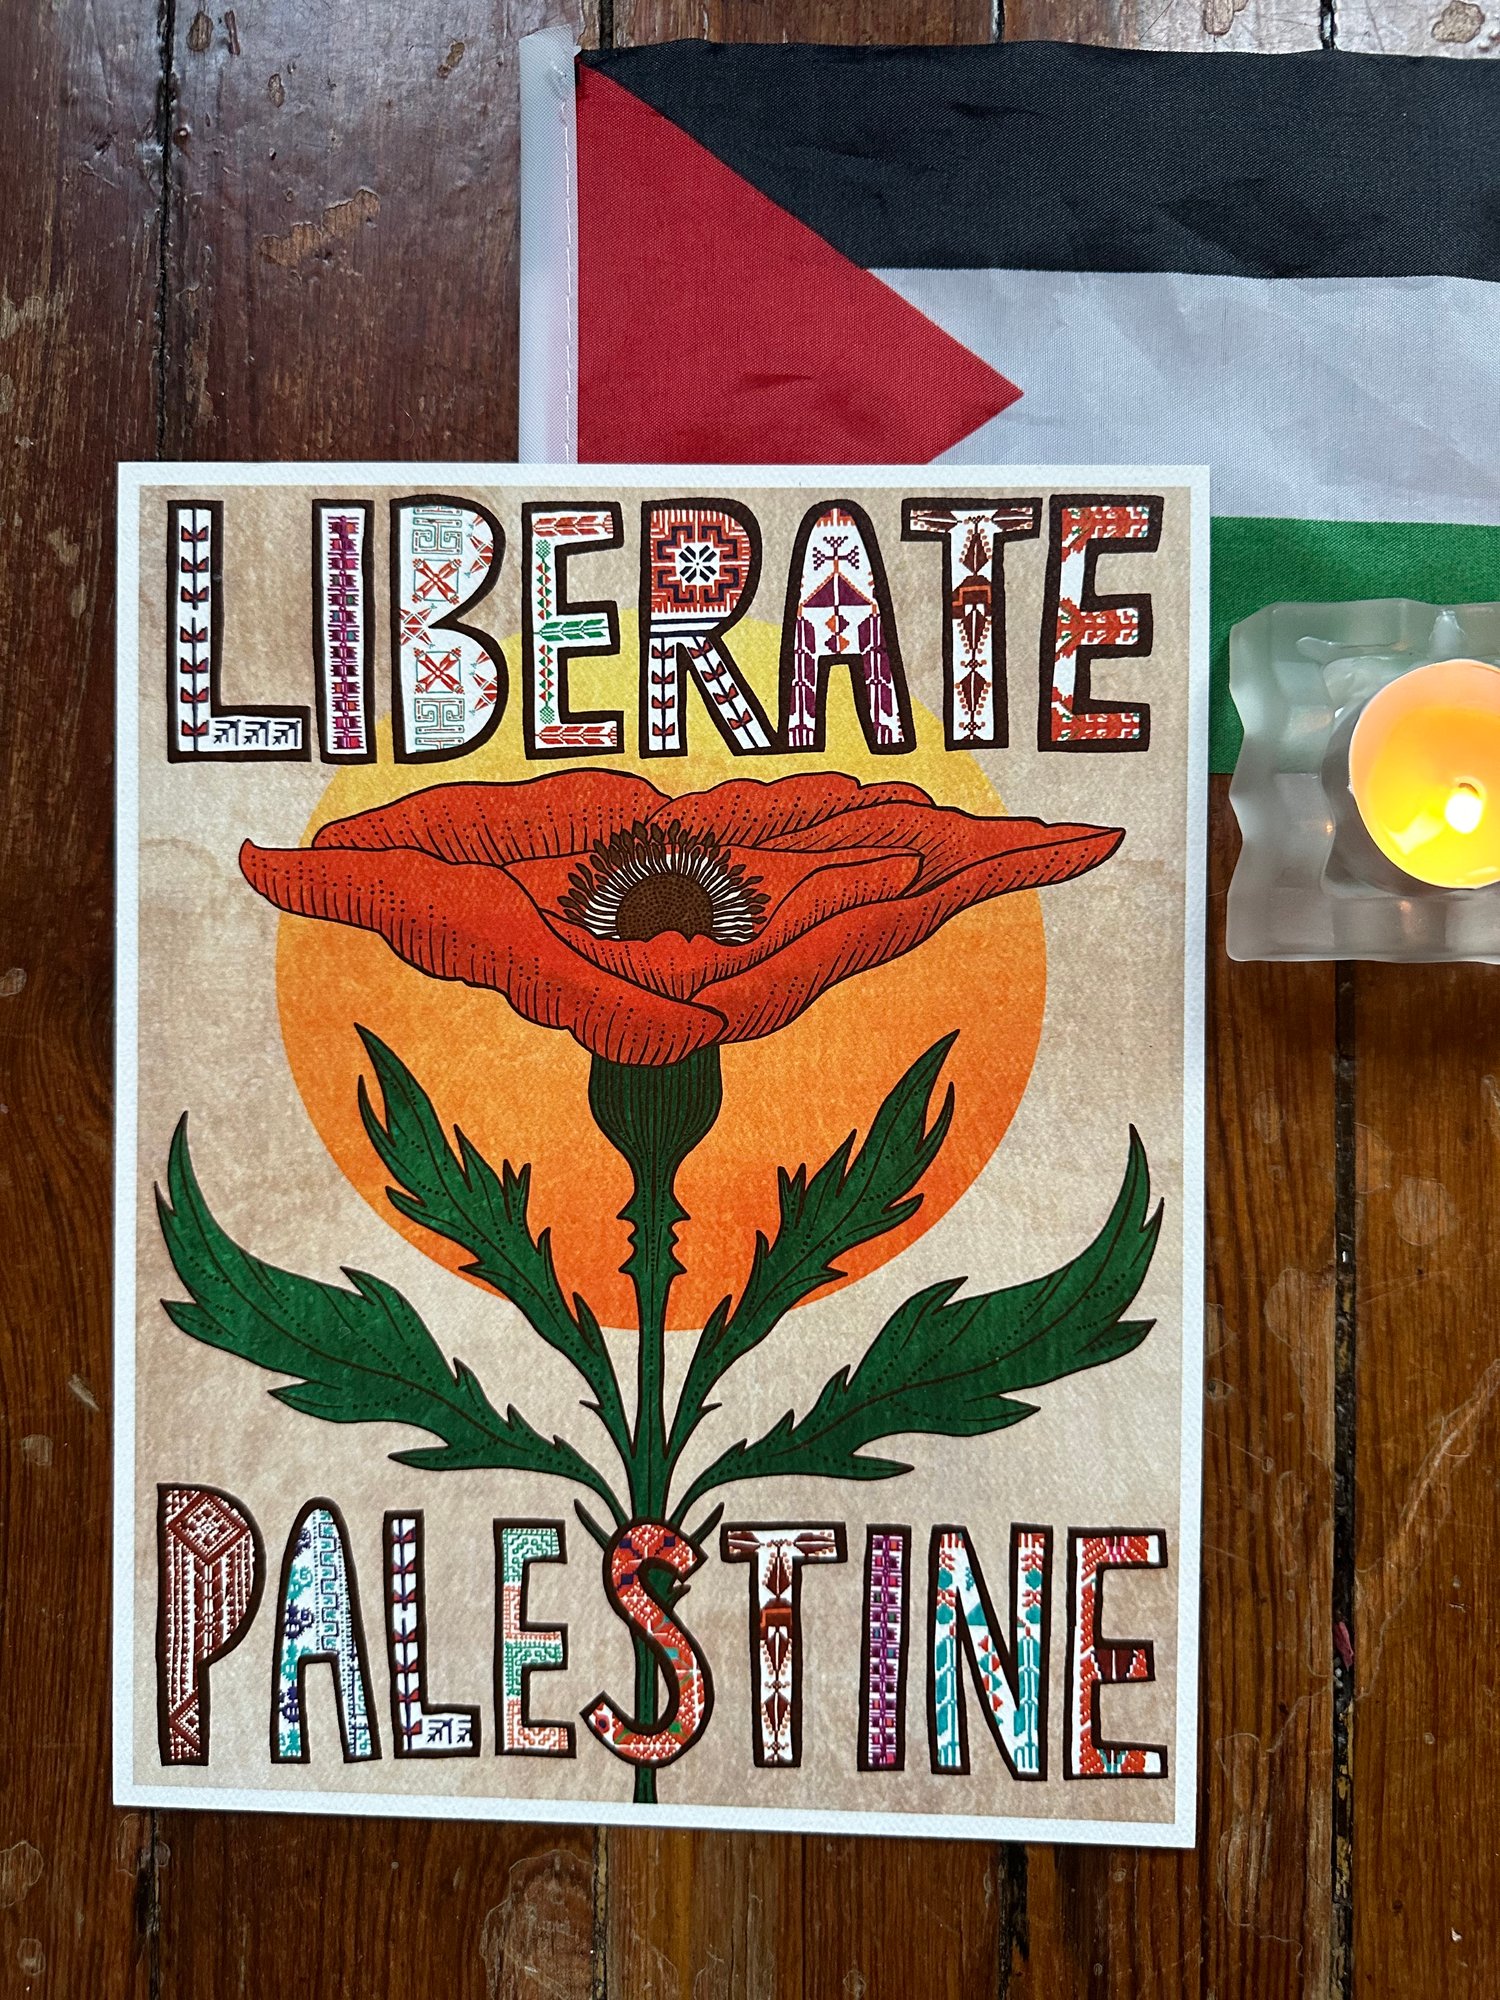 Liberate Palestine